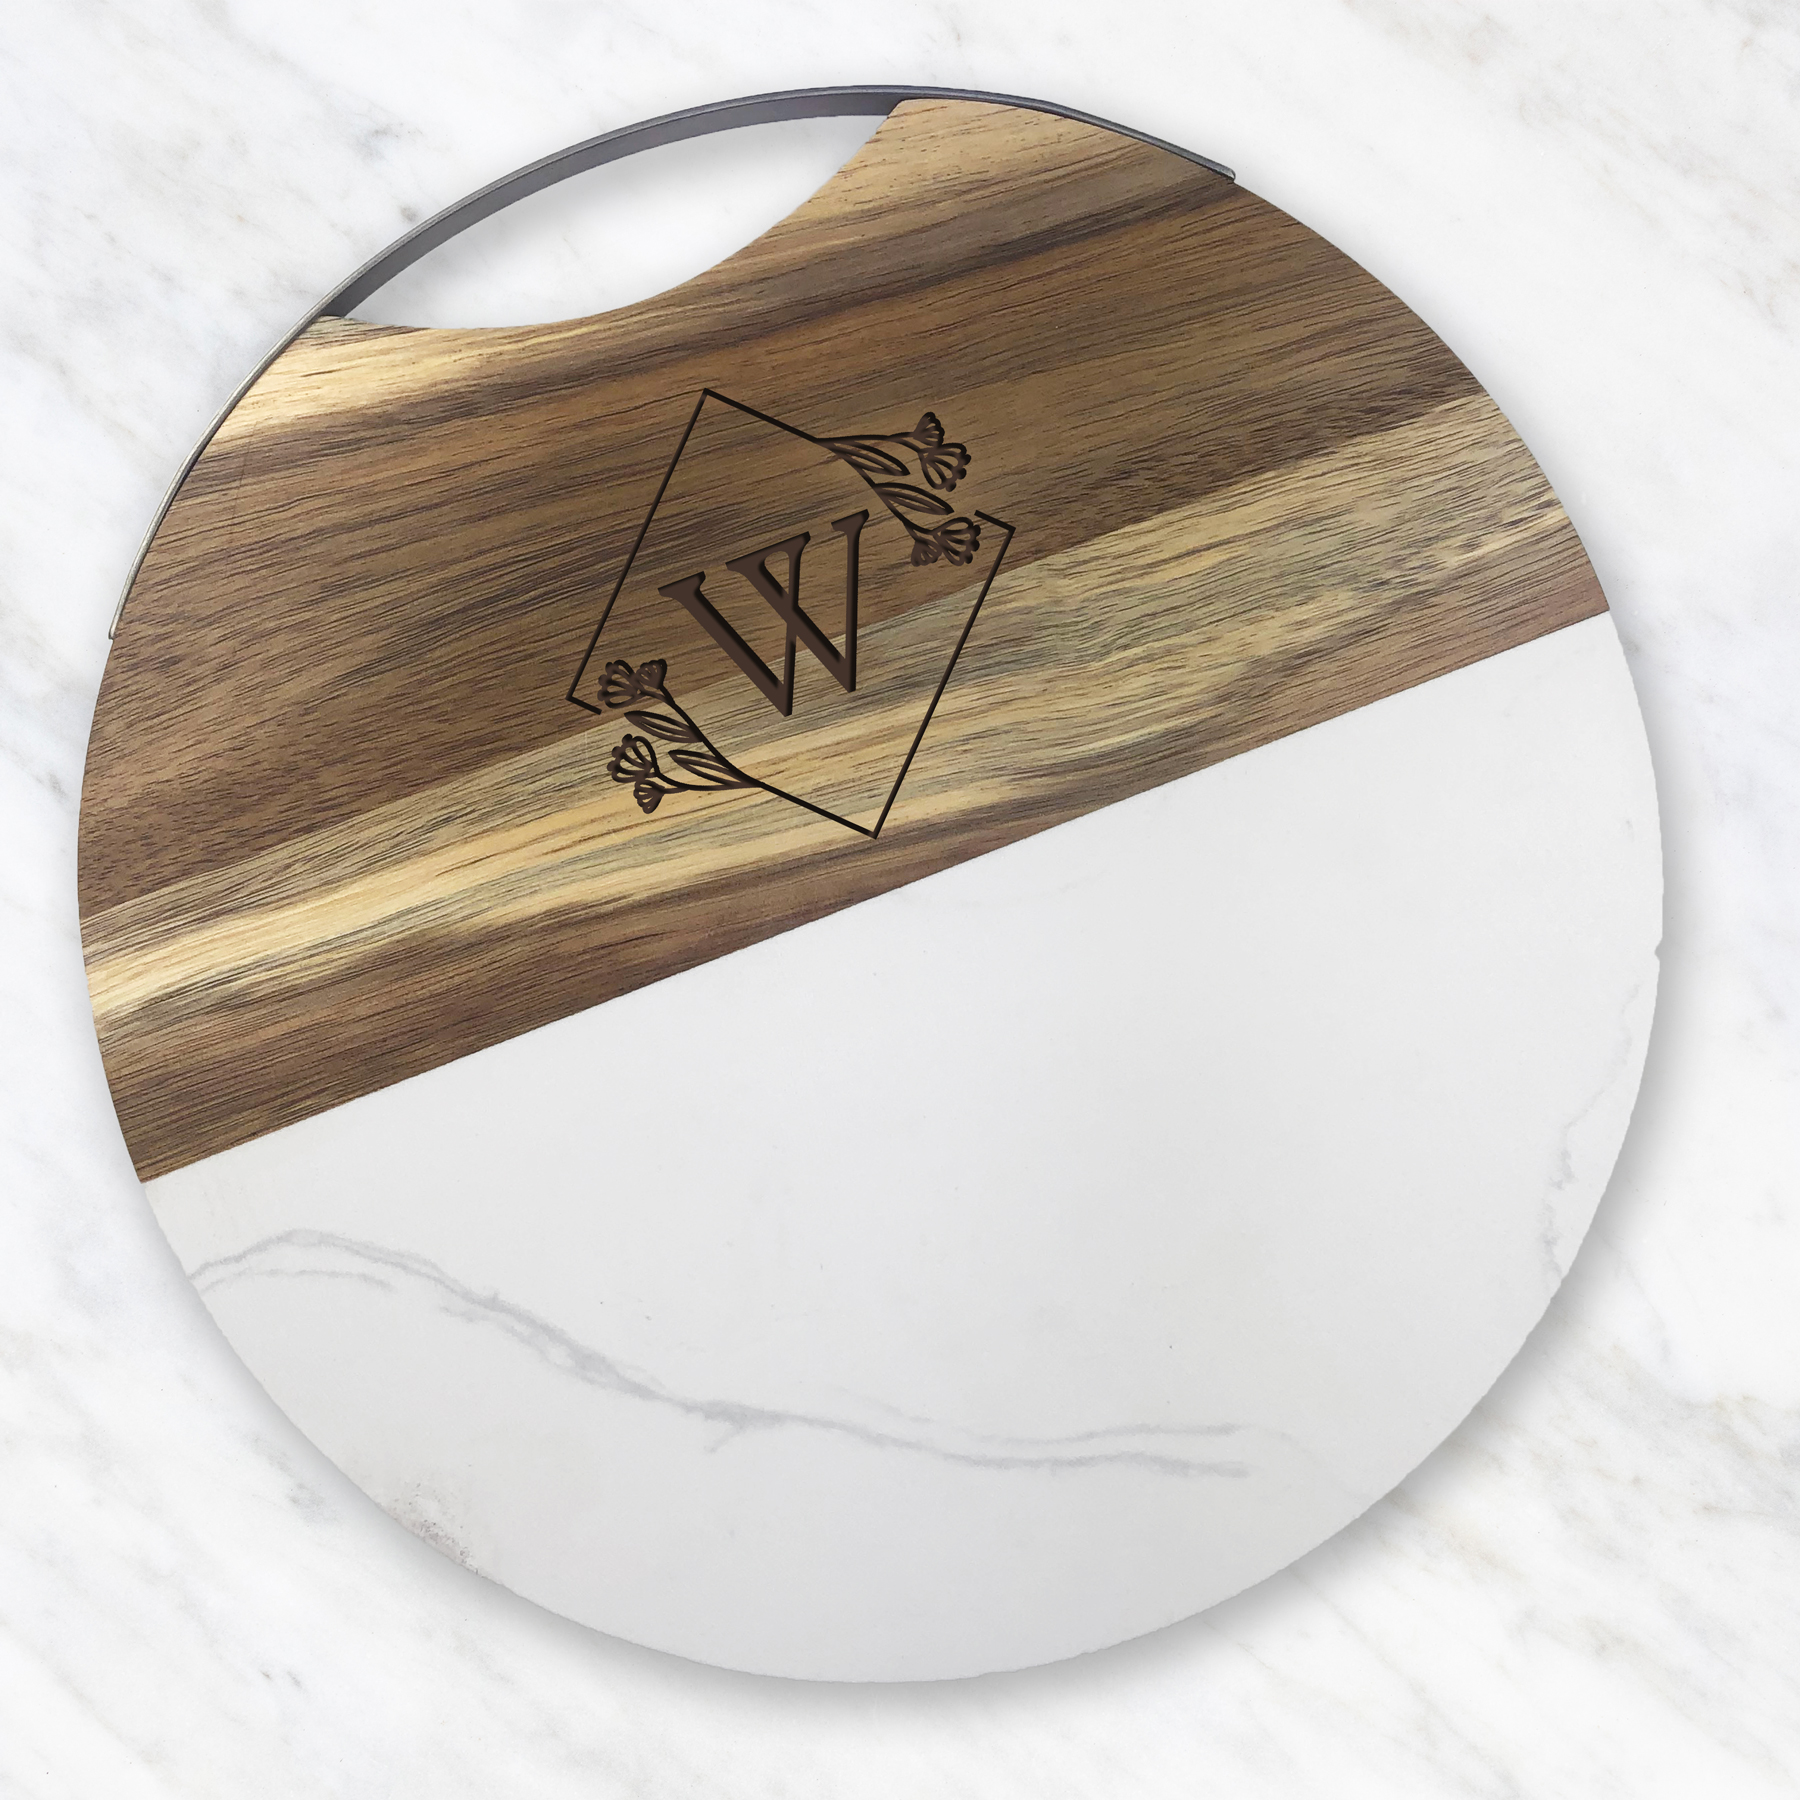 Personalized Wood Stone Cutting Board Lxxx338